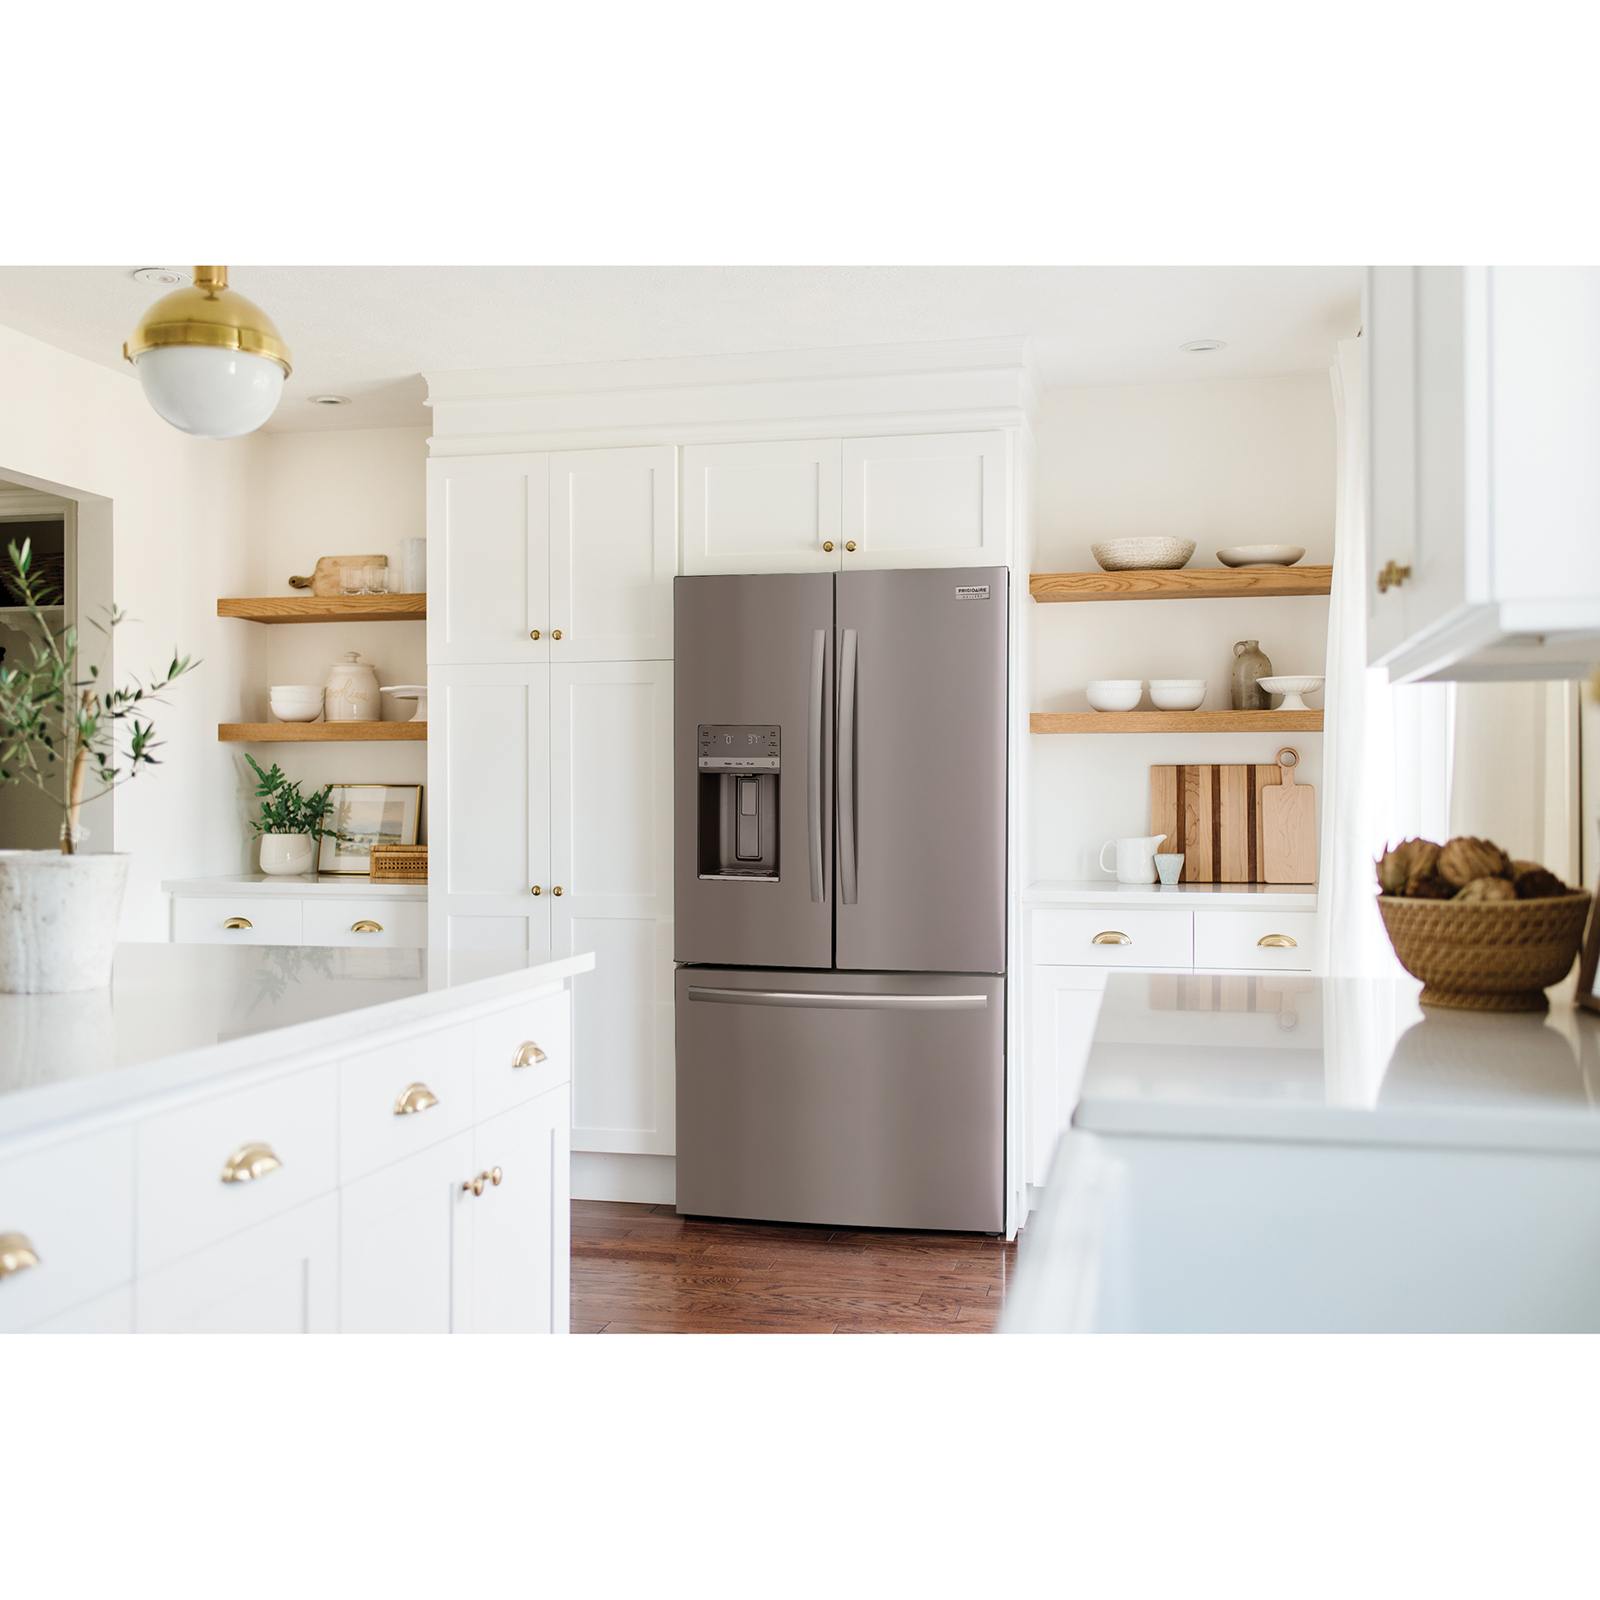 Refrigerators: Buy Refrigerators in Appliances at Sears